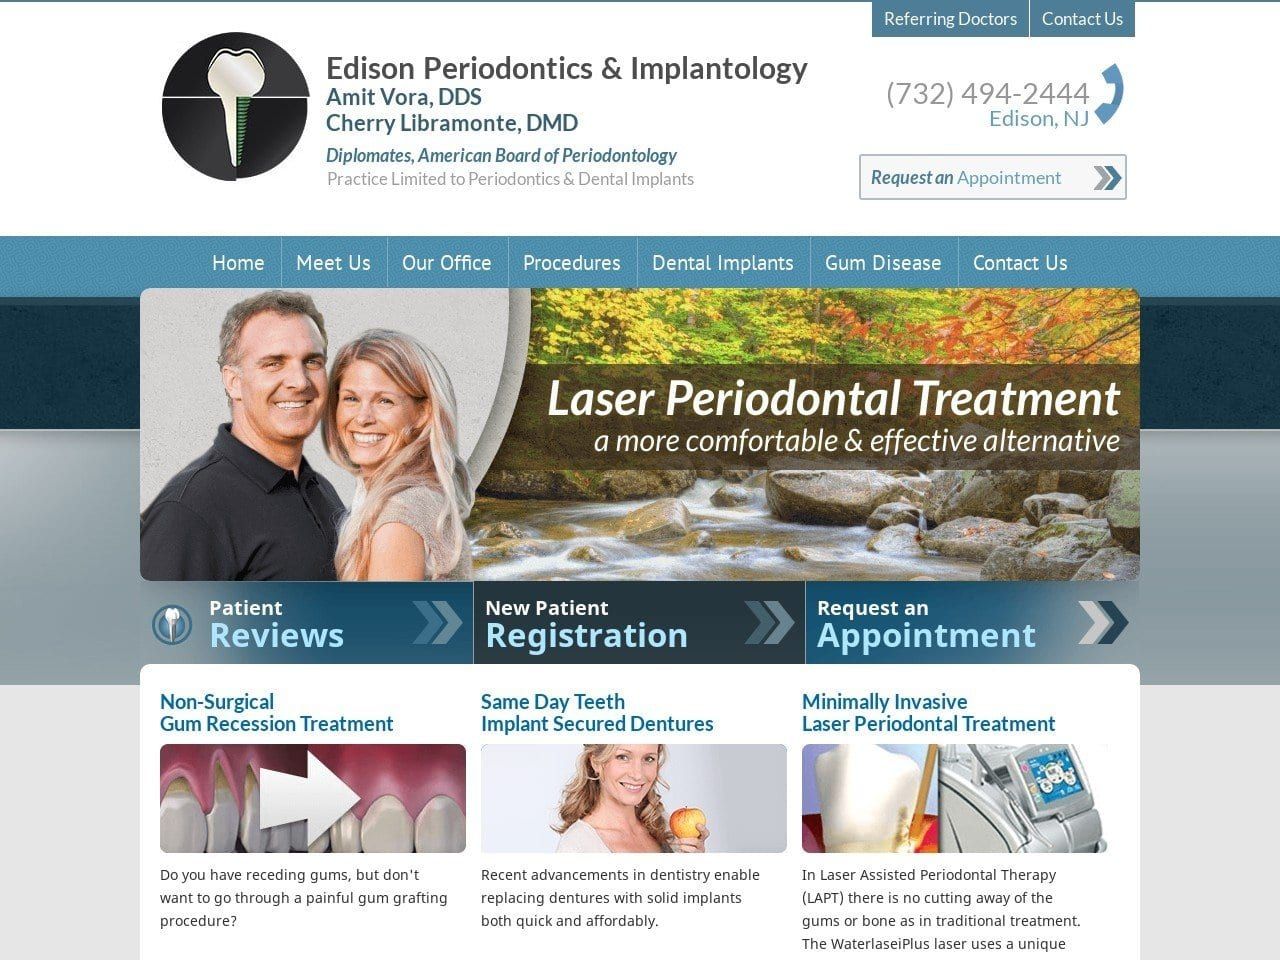 Edison Periodontics and Implantology Website Screenshot from edisonperio.com